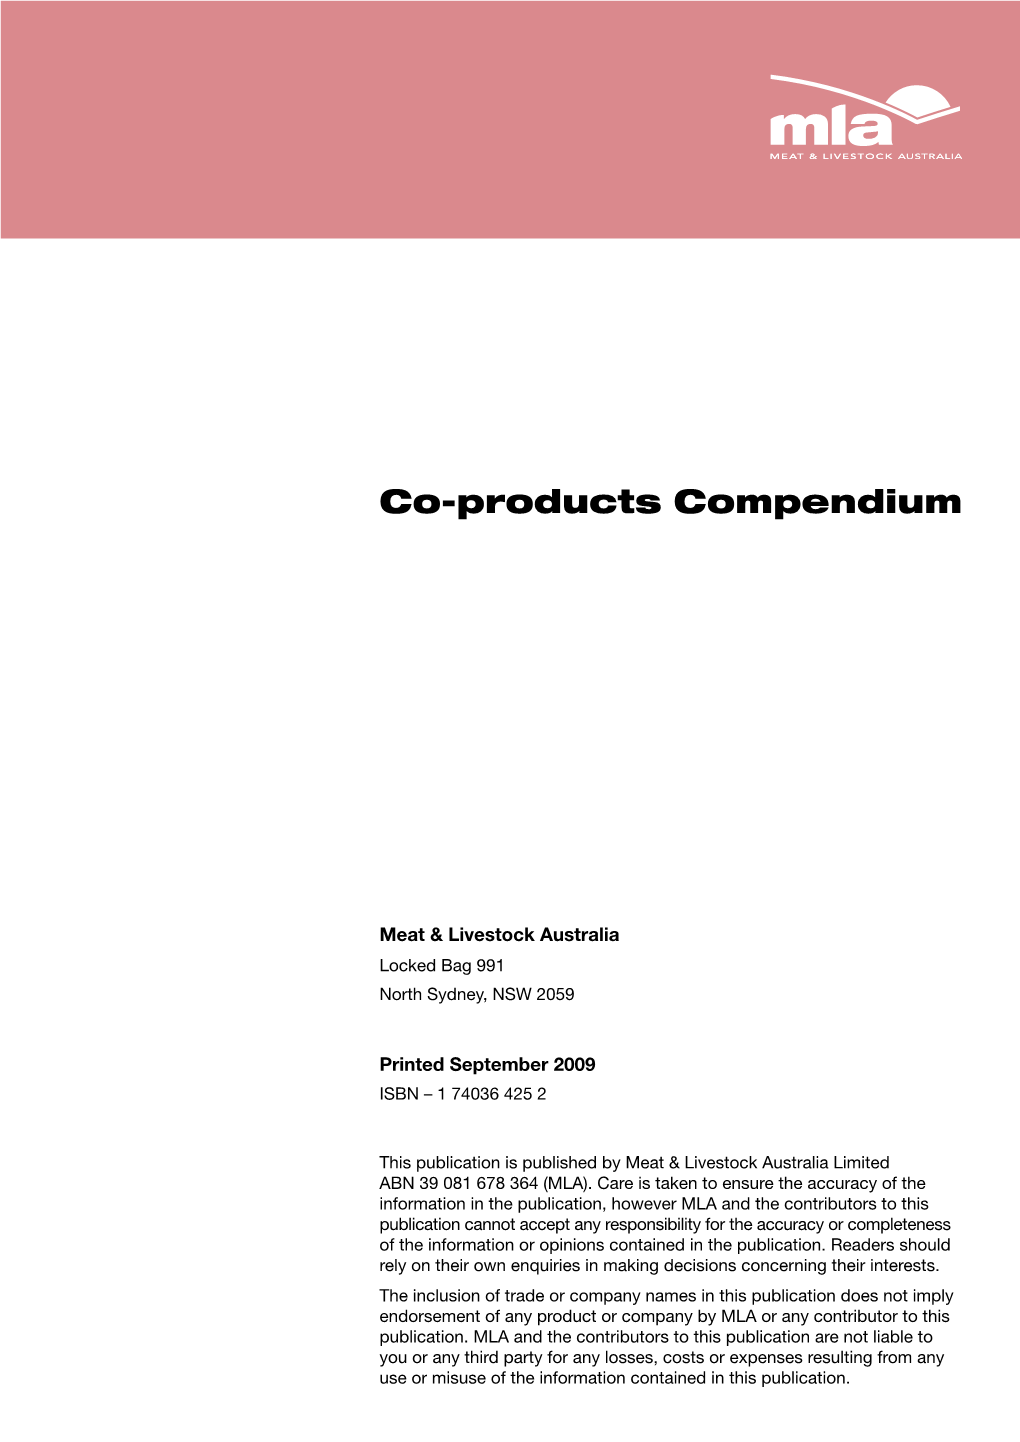 Co-Products Compendium